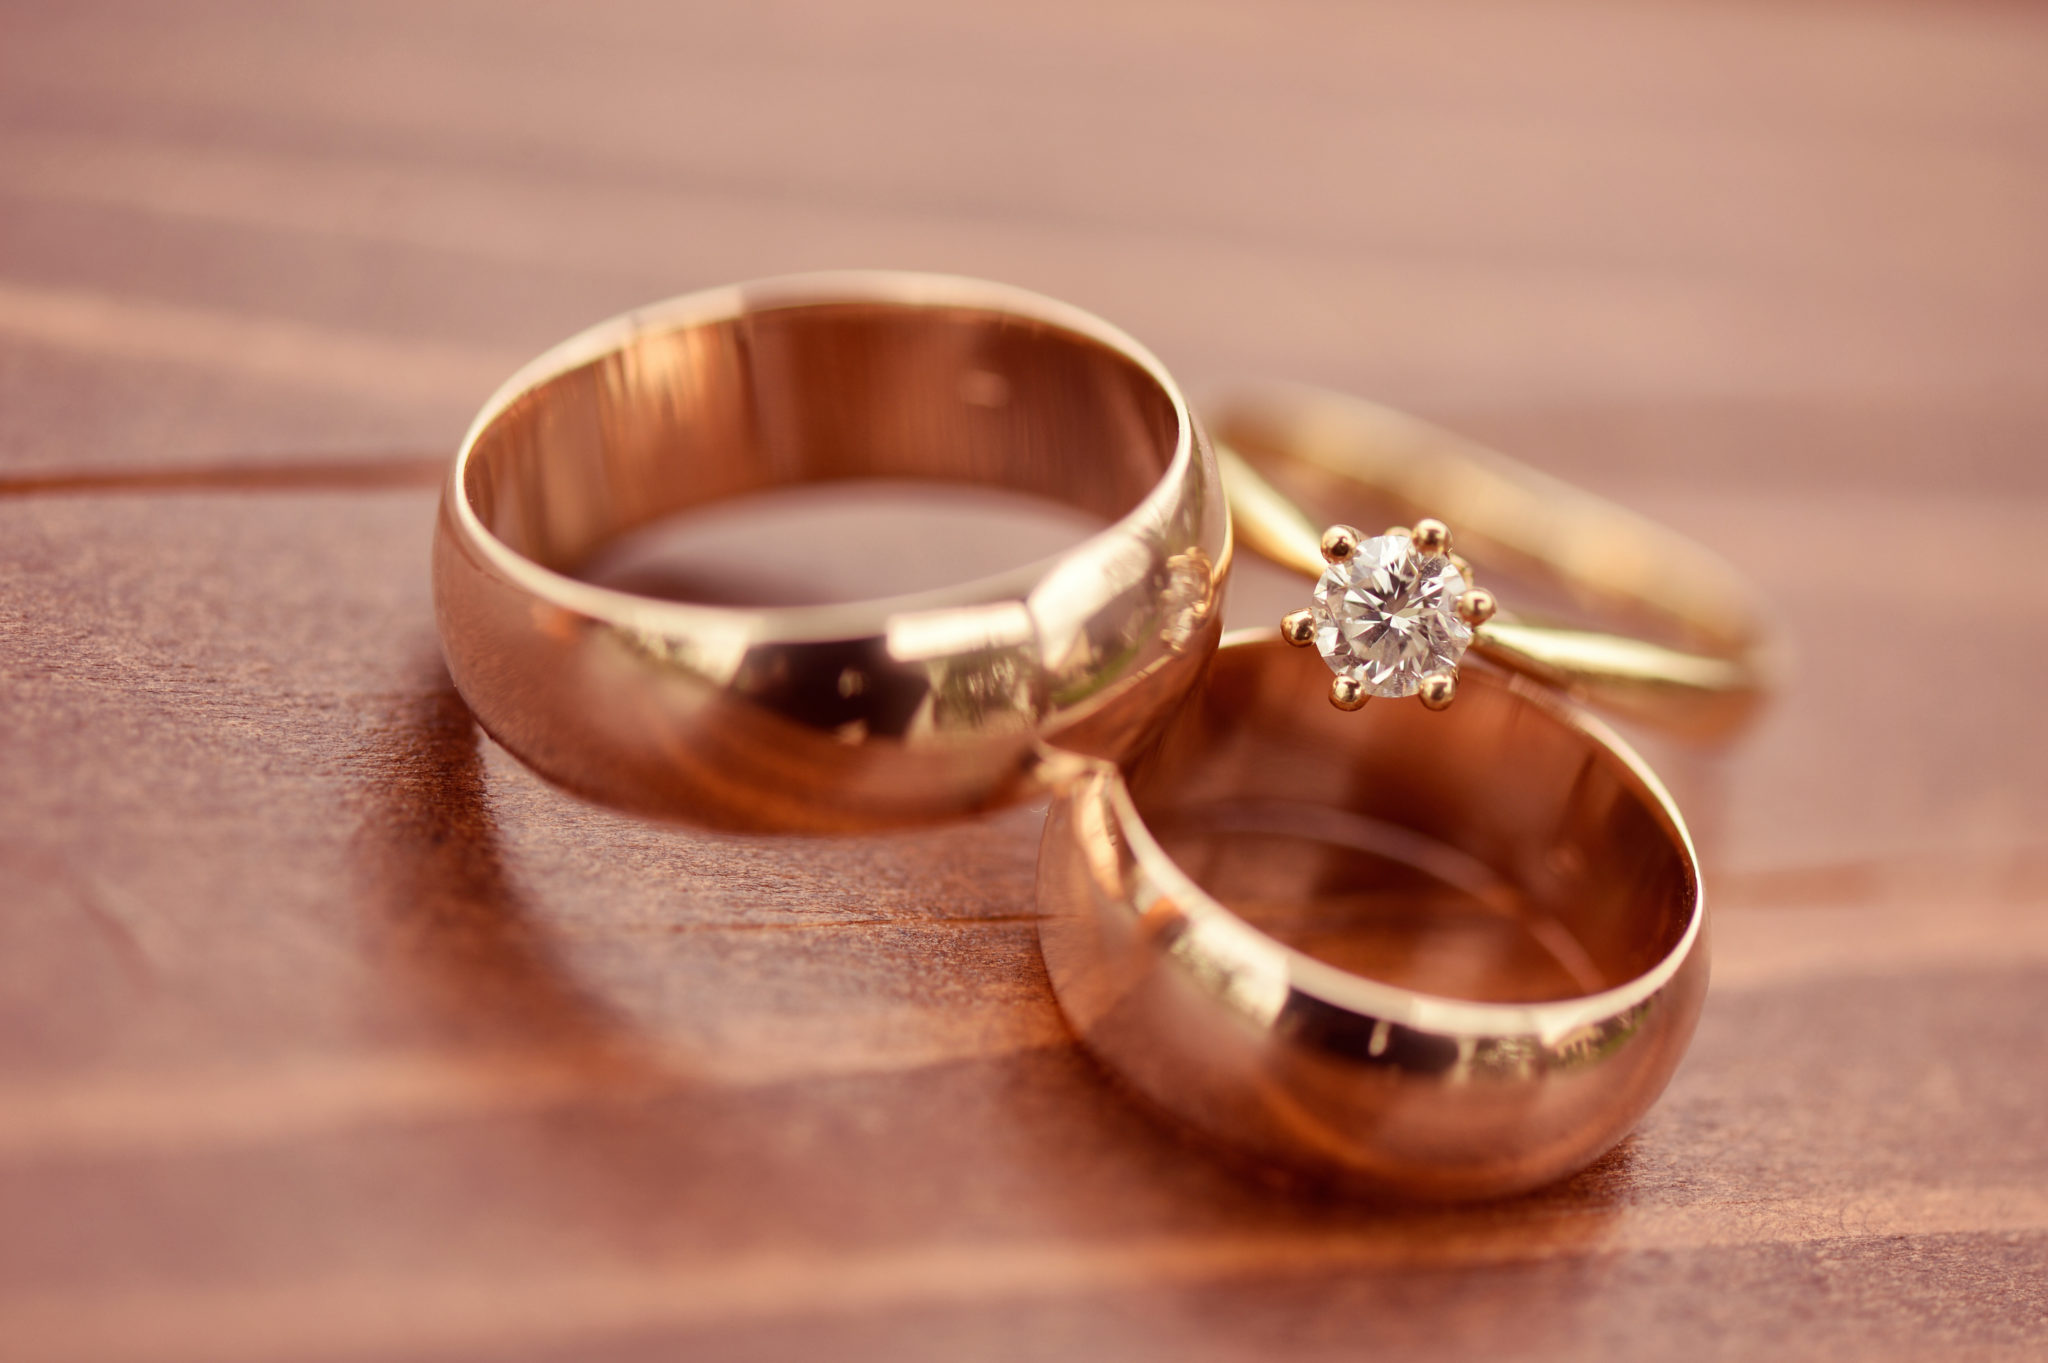 https://storage.googleapis.com/stateless-ceoblognation-com/2022/06/7a0d3234-custom-wedding-rings-scaled.jpeg